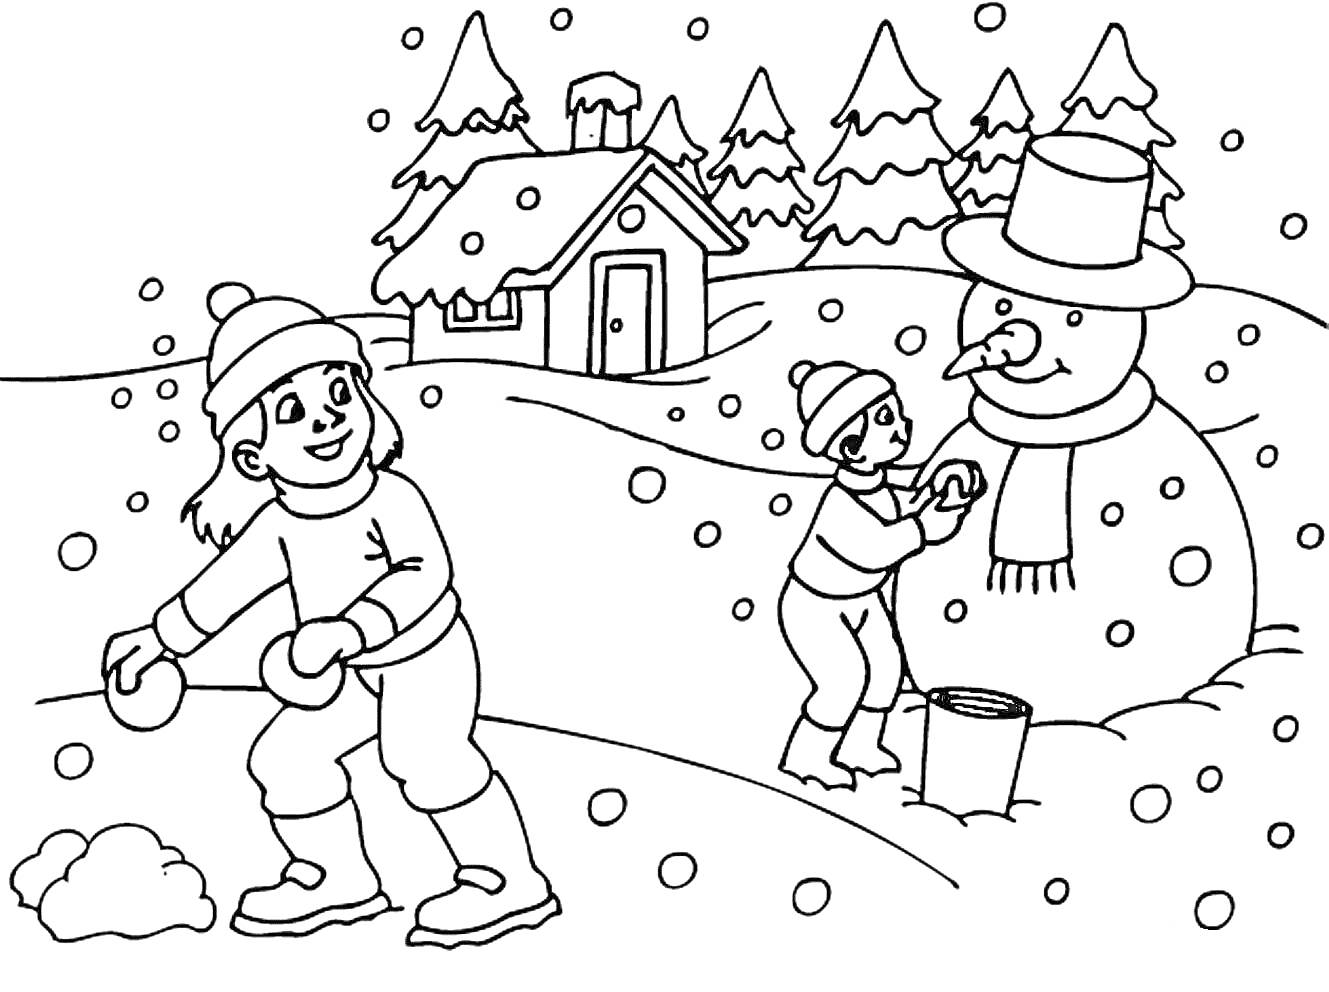 Дети играют на снегу возле снеговика, домик и ёлочки на заднем плане